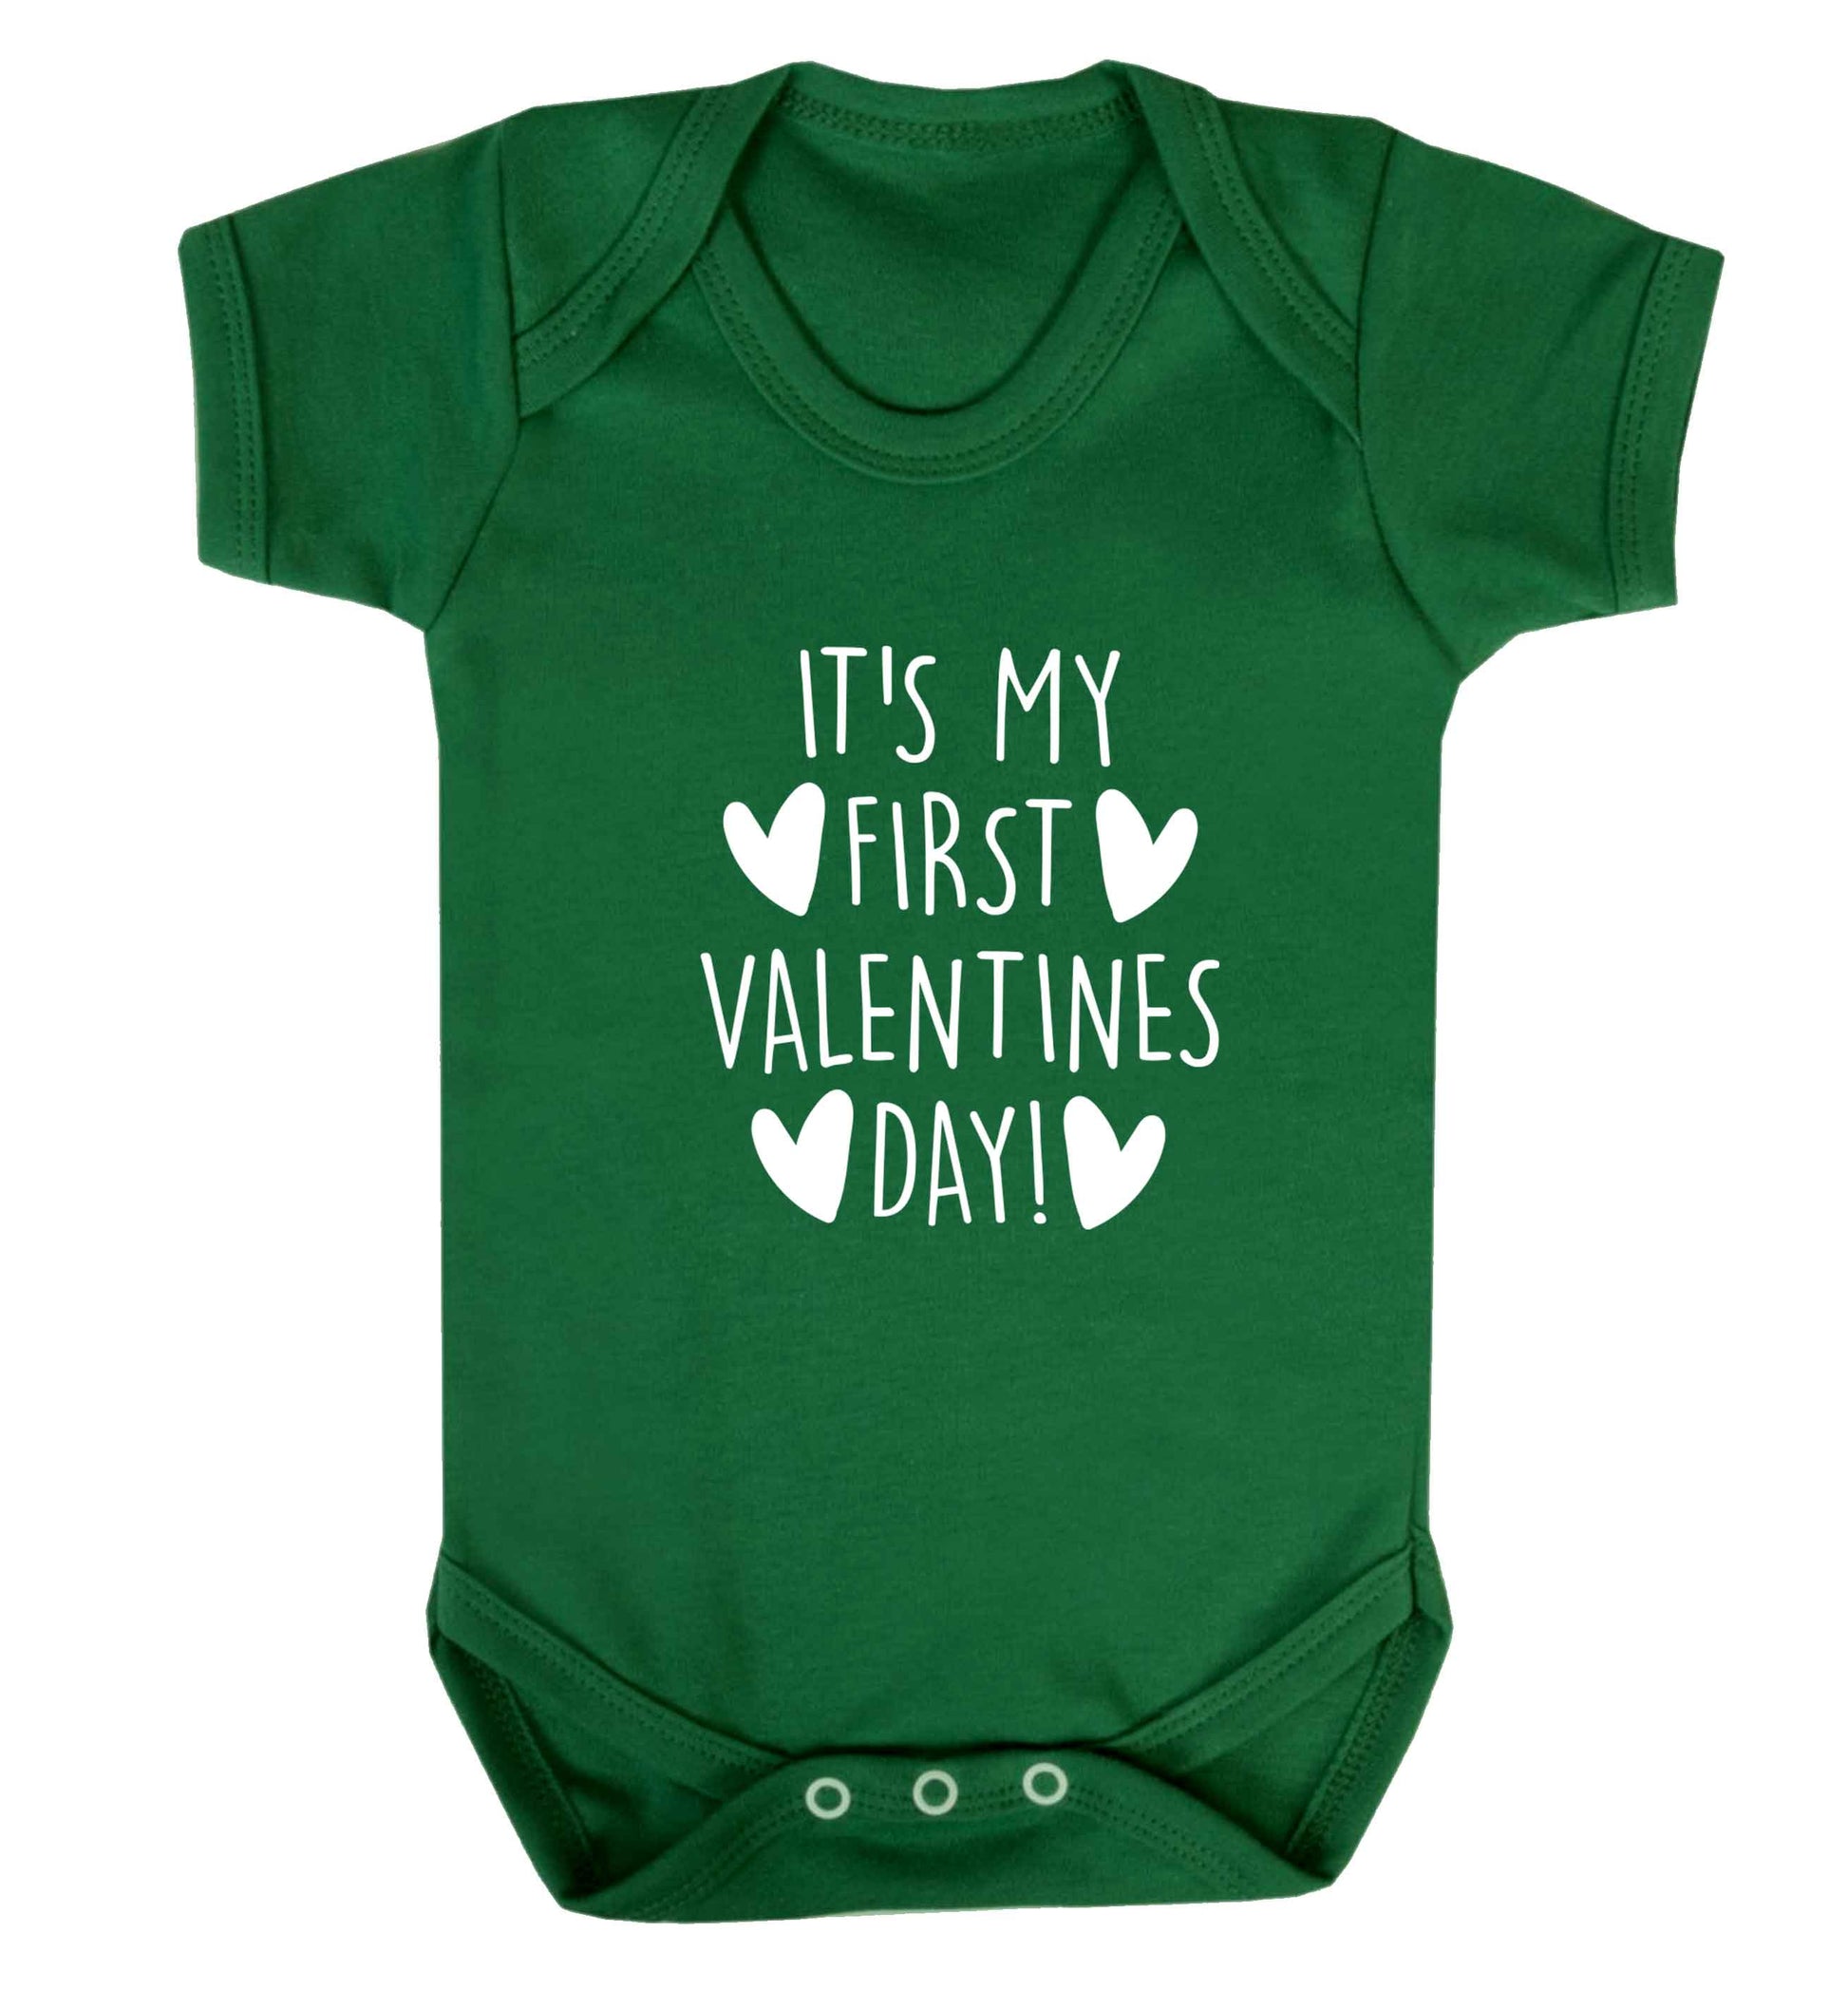 It's my first valentines day! baby vest green 18-24 months